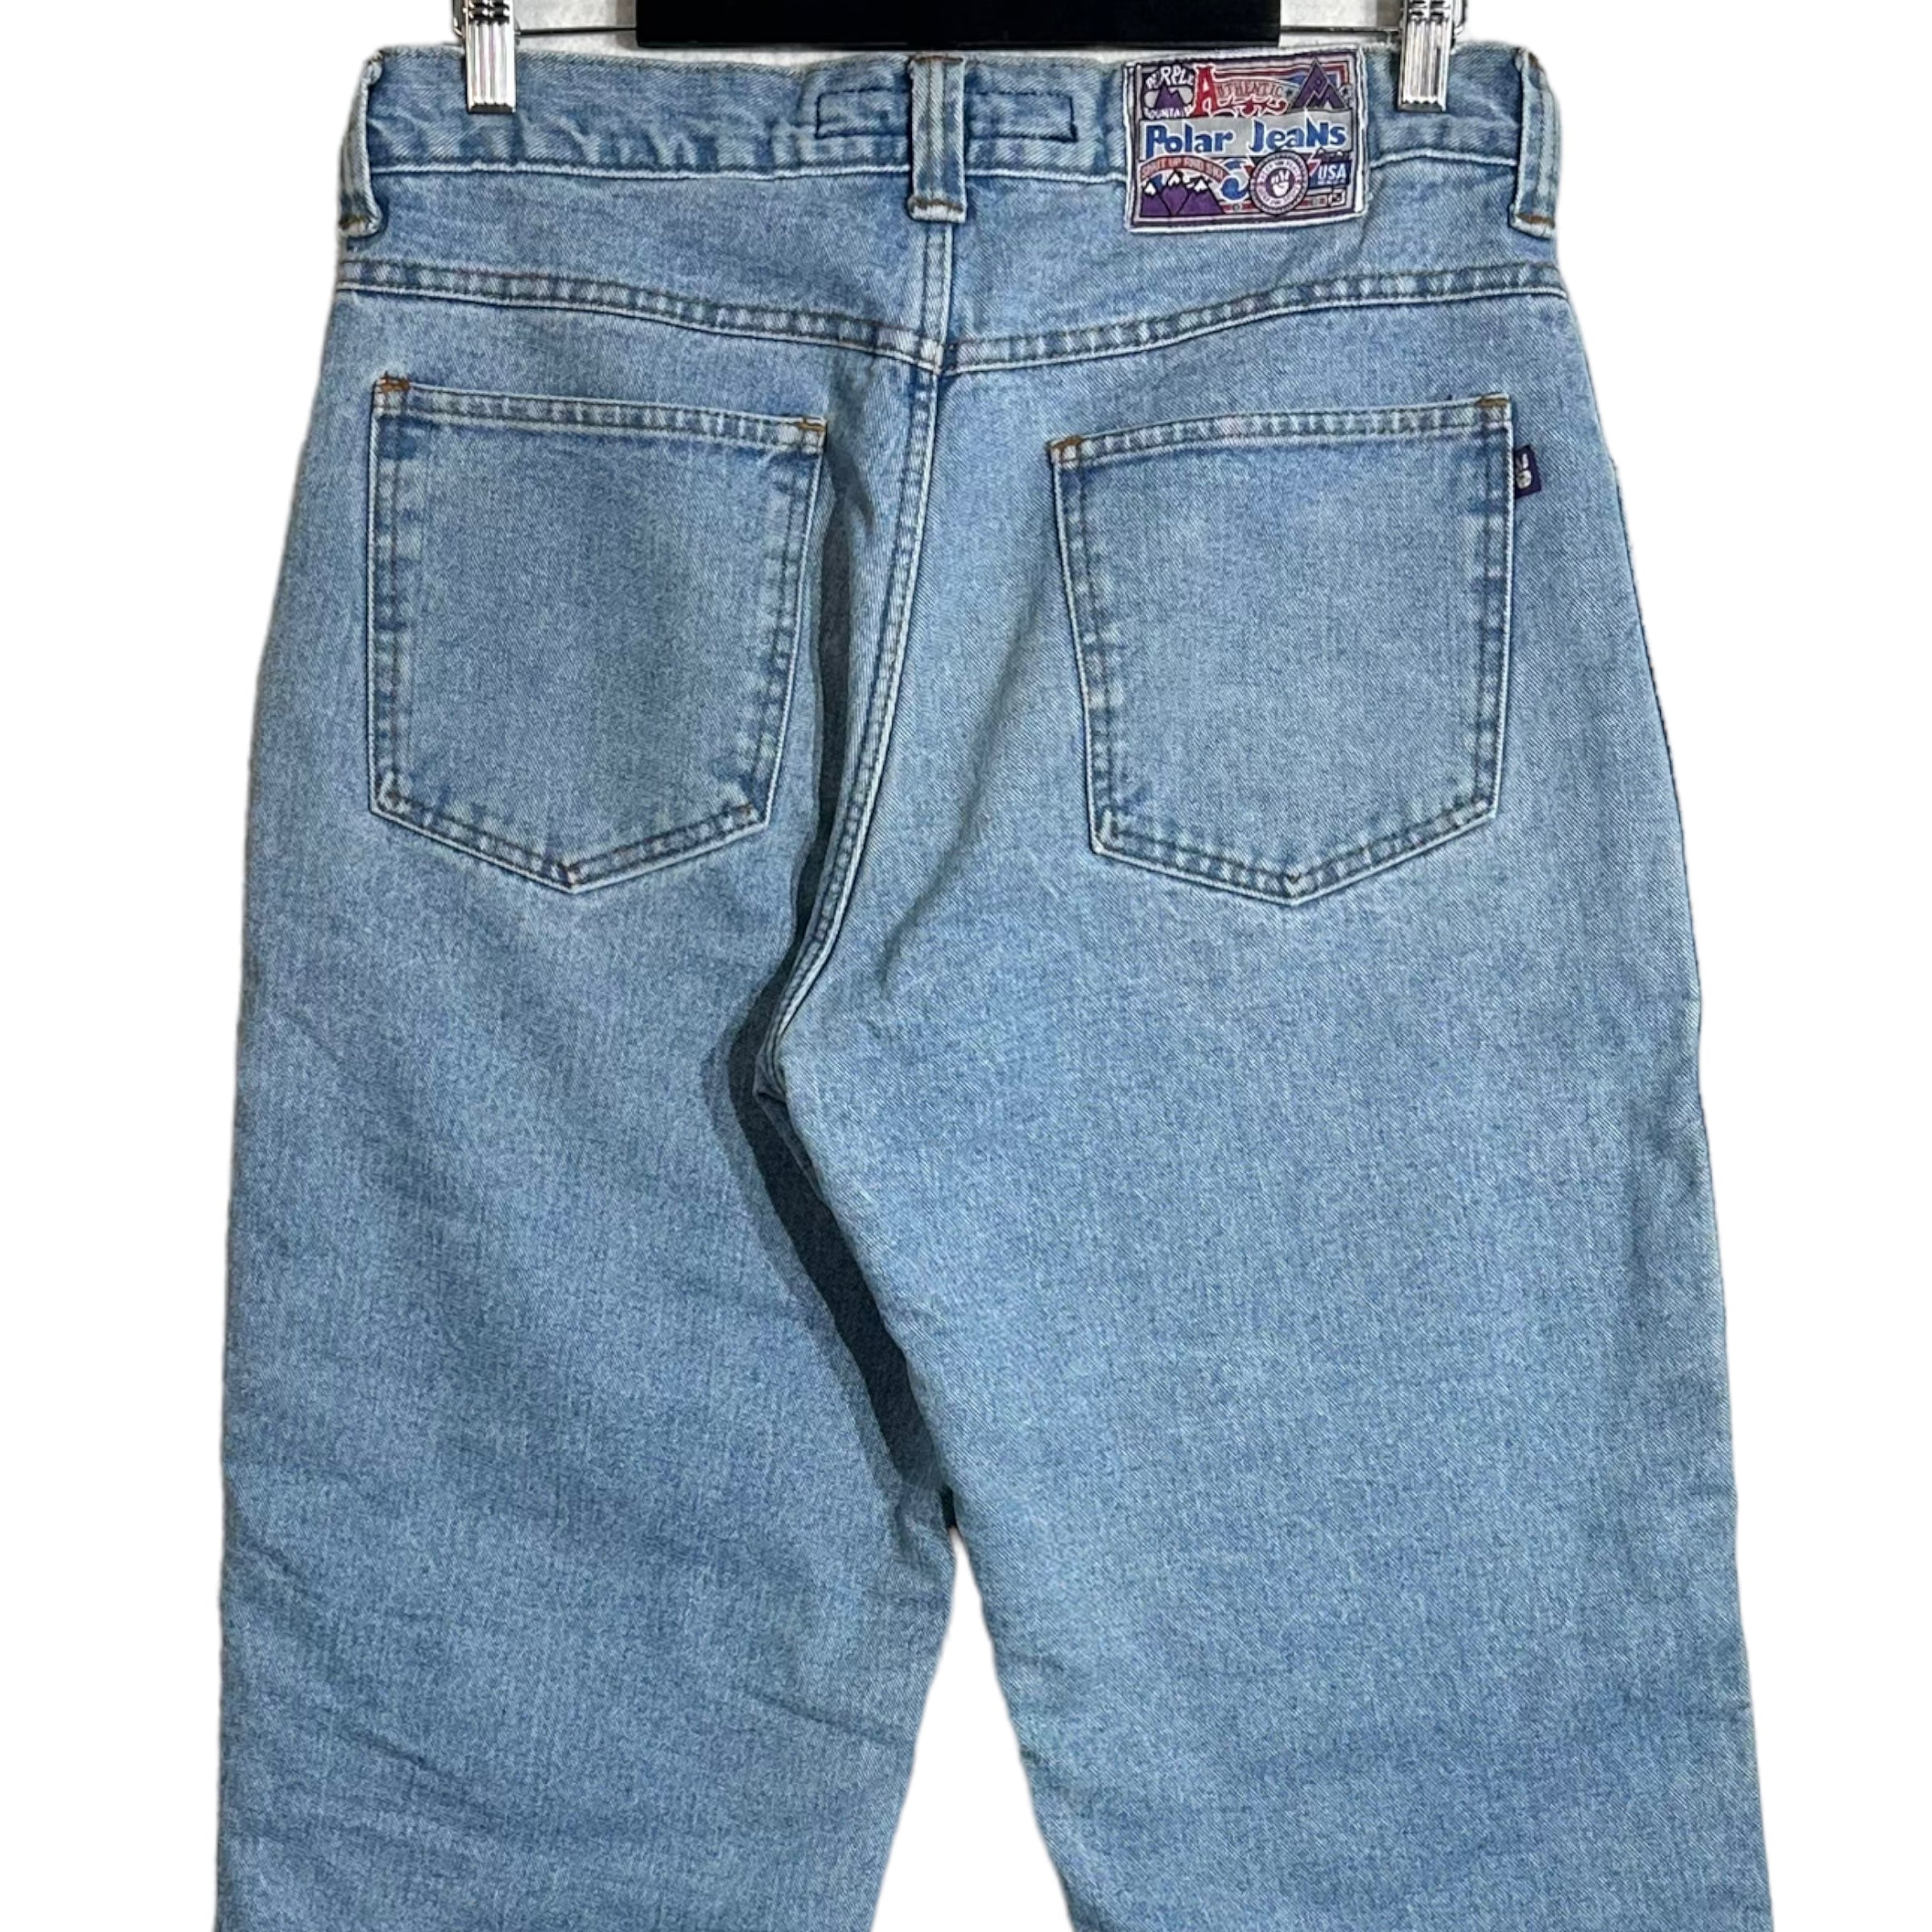 Vintage Polartec Fleece Lined Denim Jeans